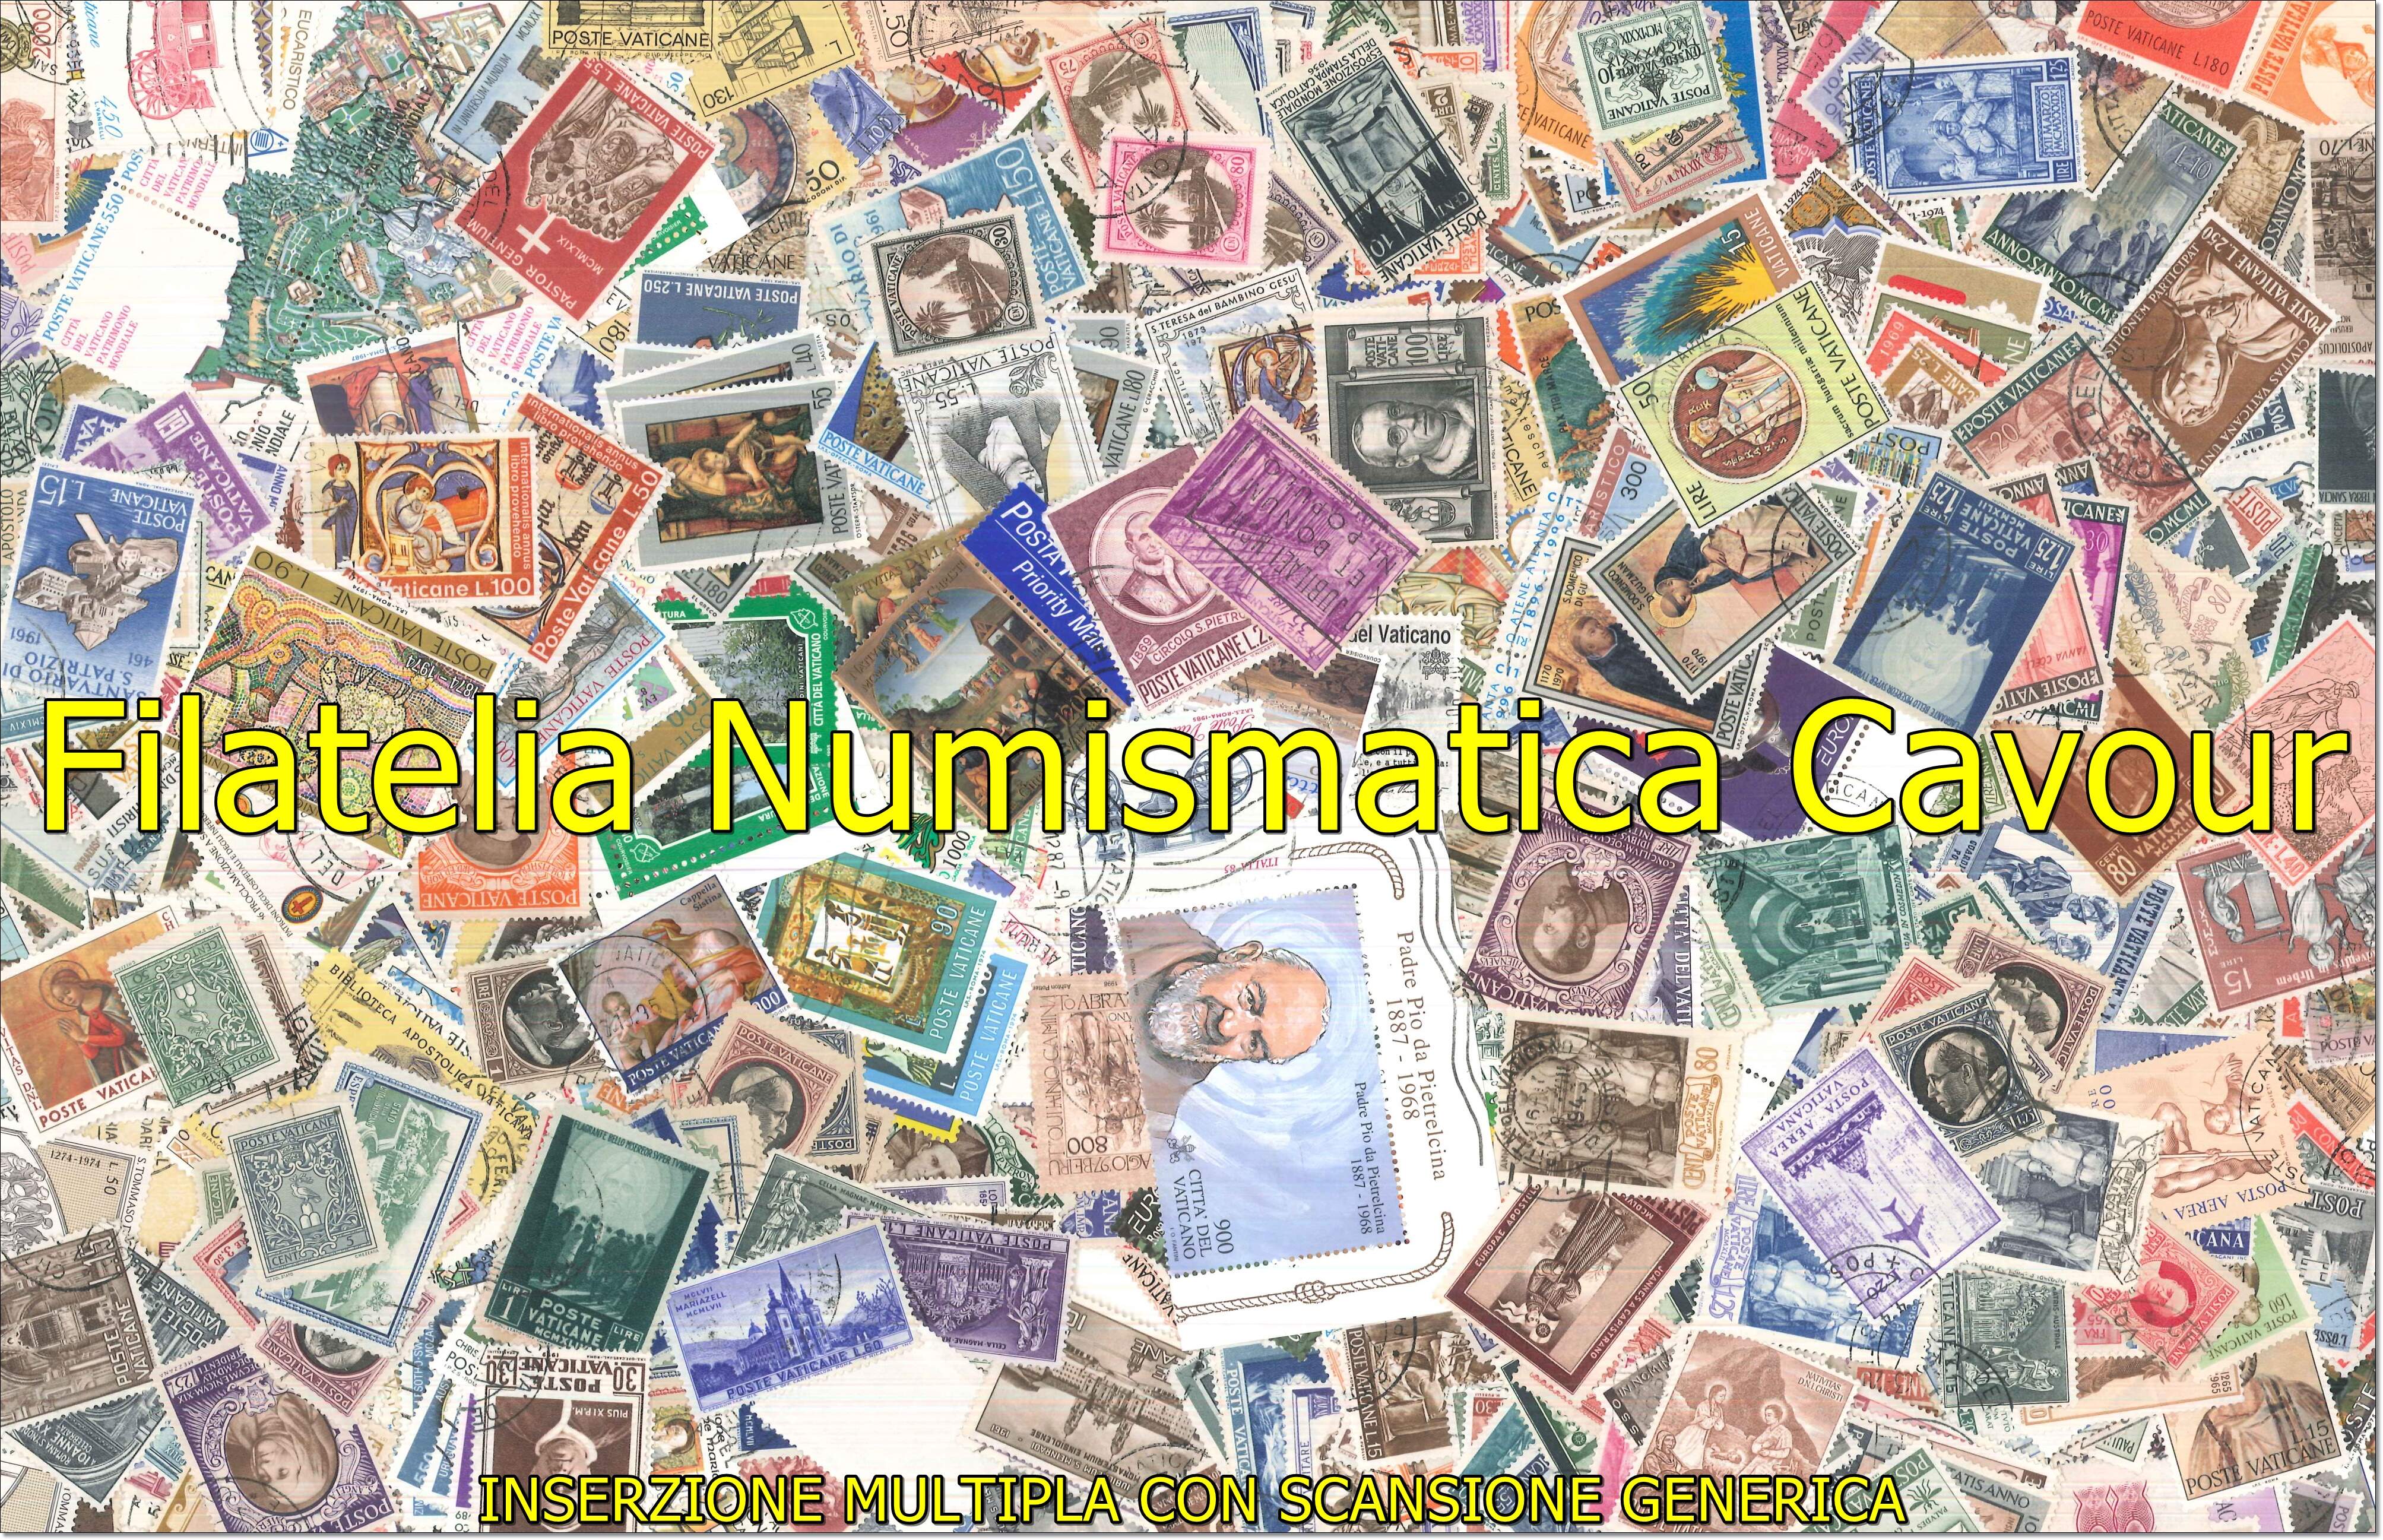 100 500 1000 francobolli usati VATICANO - VARI FORMATI